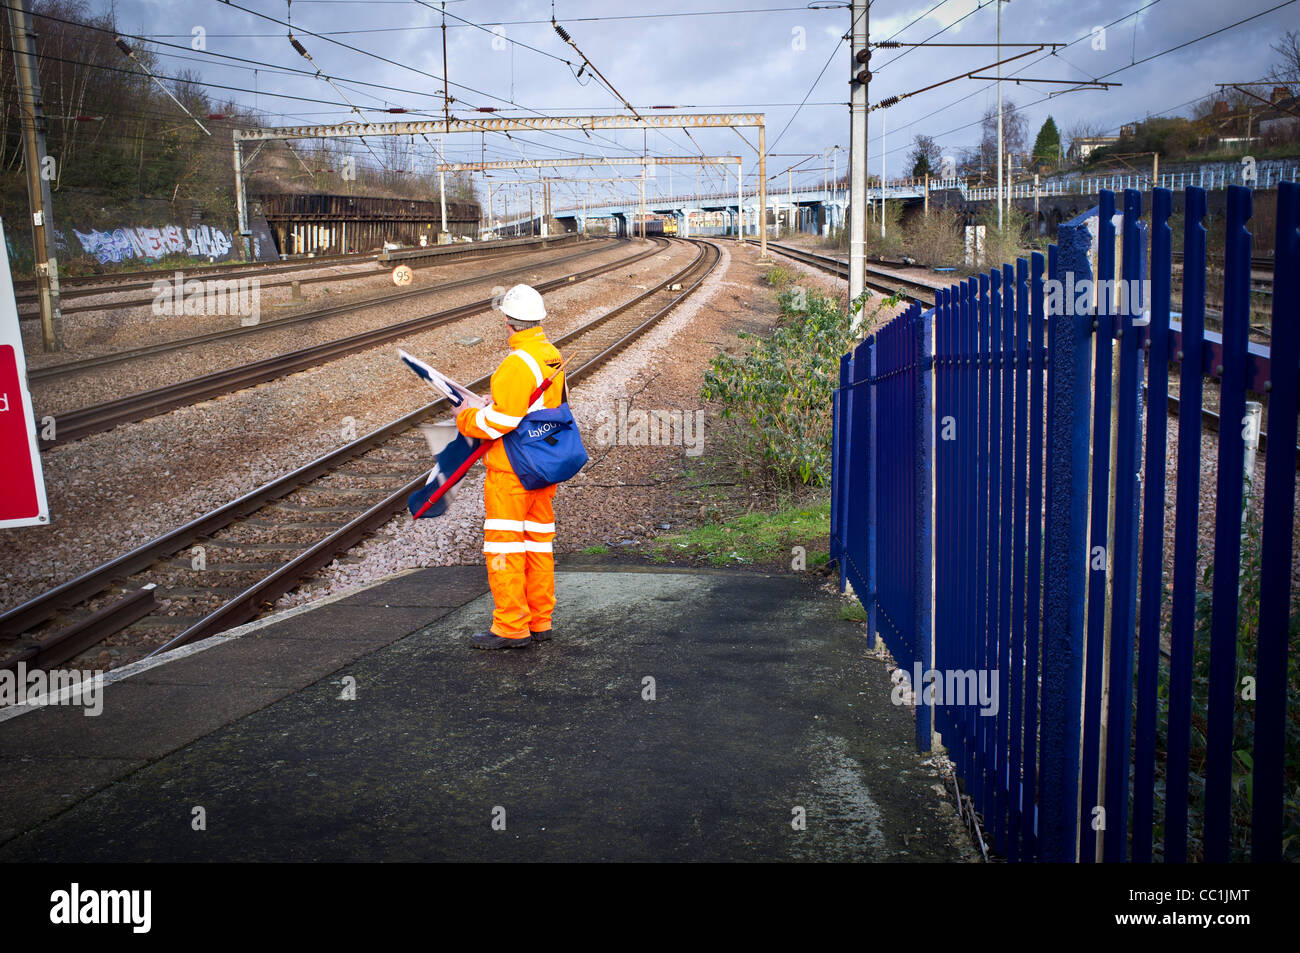 Network Rail railway worker Stock Photo